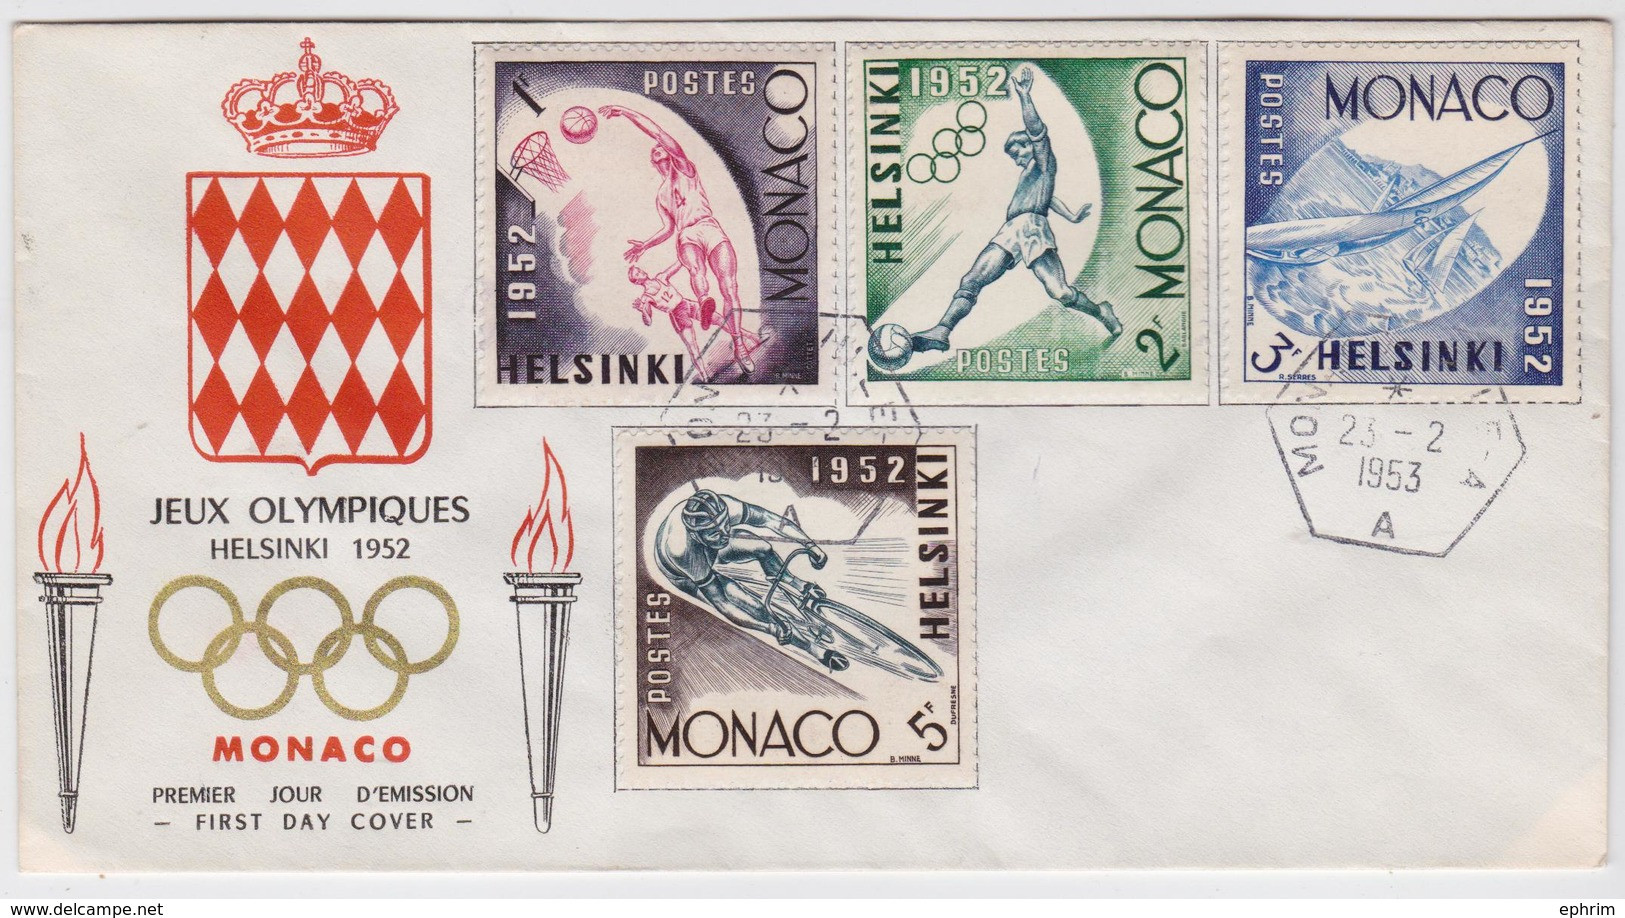 Jeux Olympiques Helsinki 1952 - FDC Enveloppe Premier Jour Monaco - Timbre Cyclisme - Basket-Ball Stamp Football Voile - Summer 1952: Helsinki